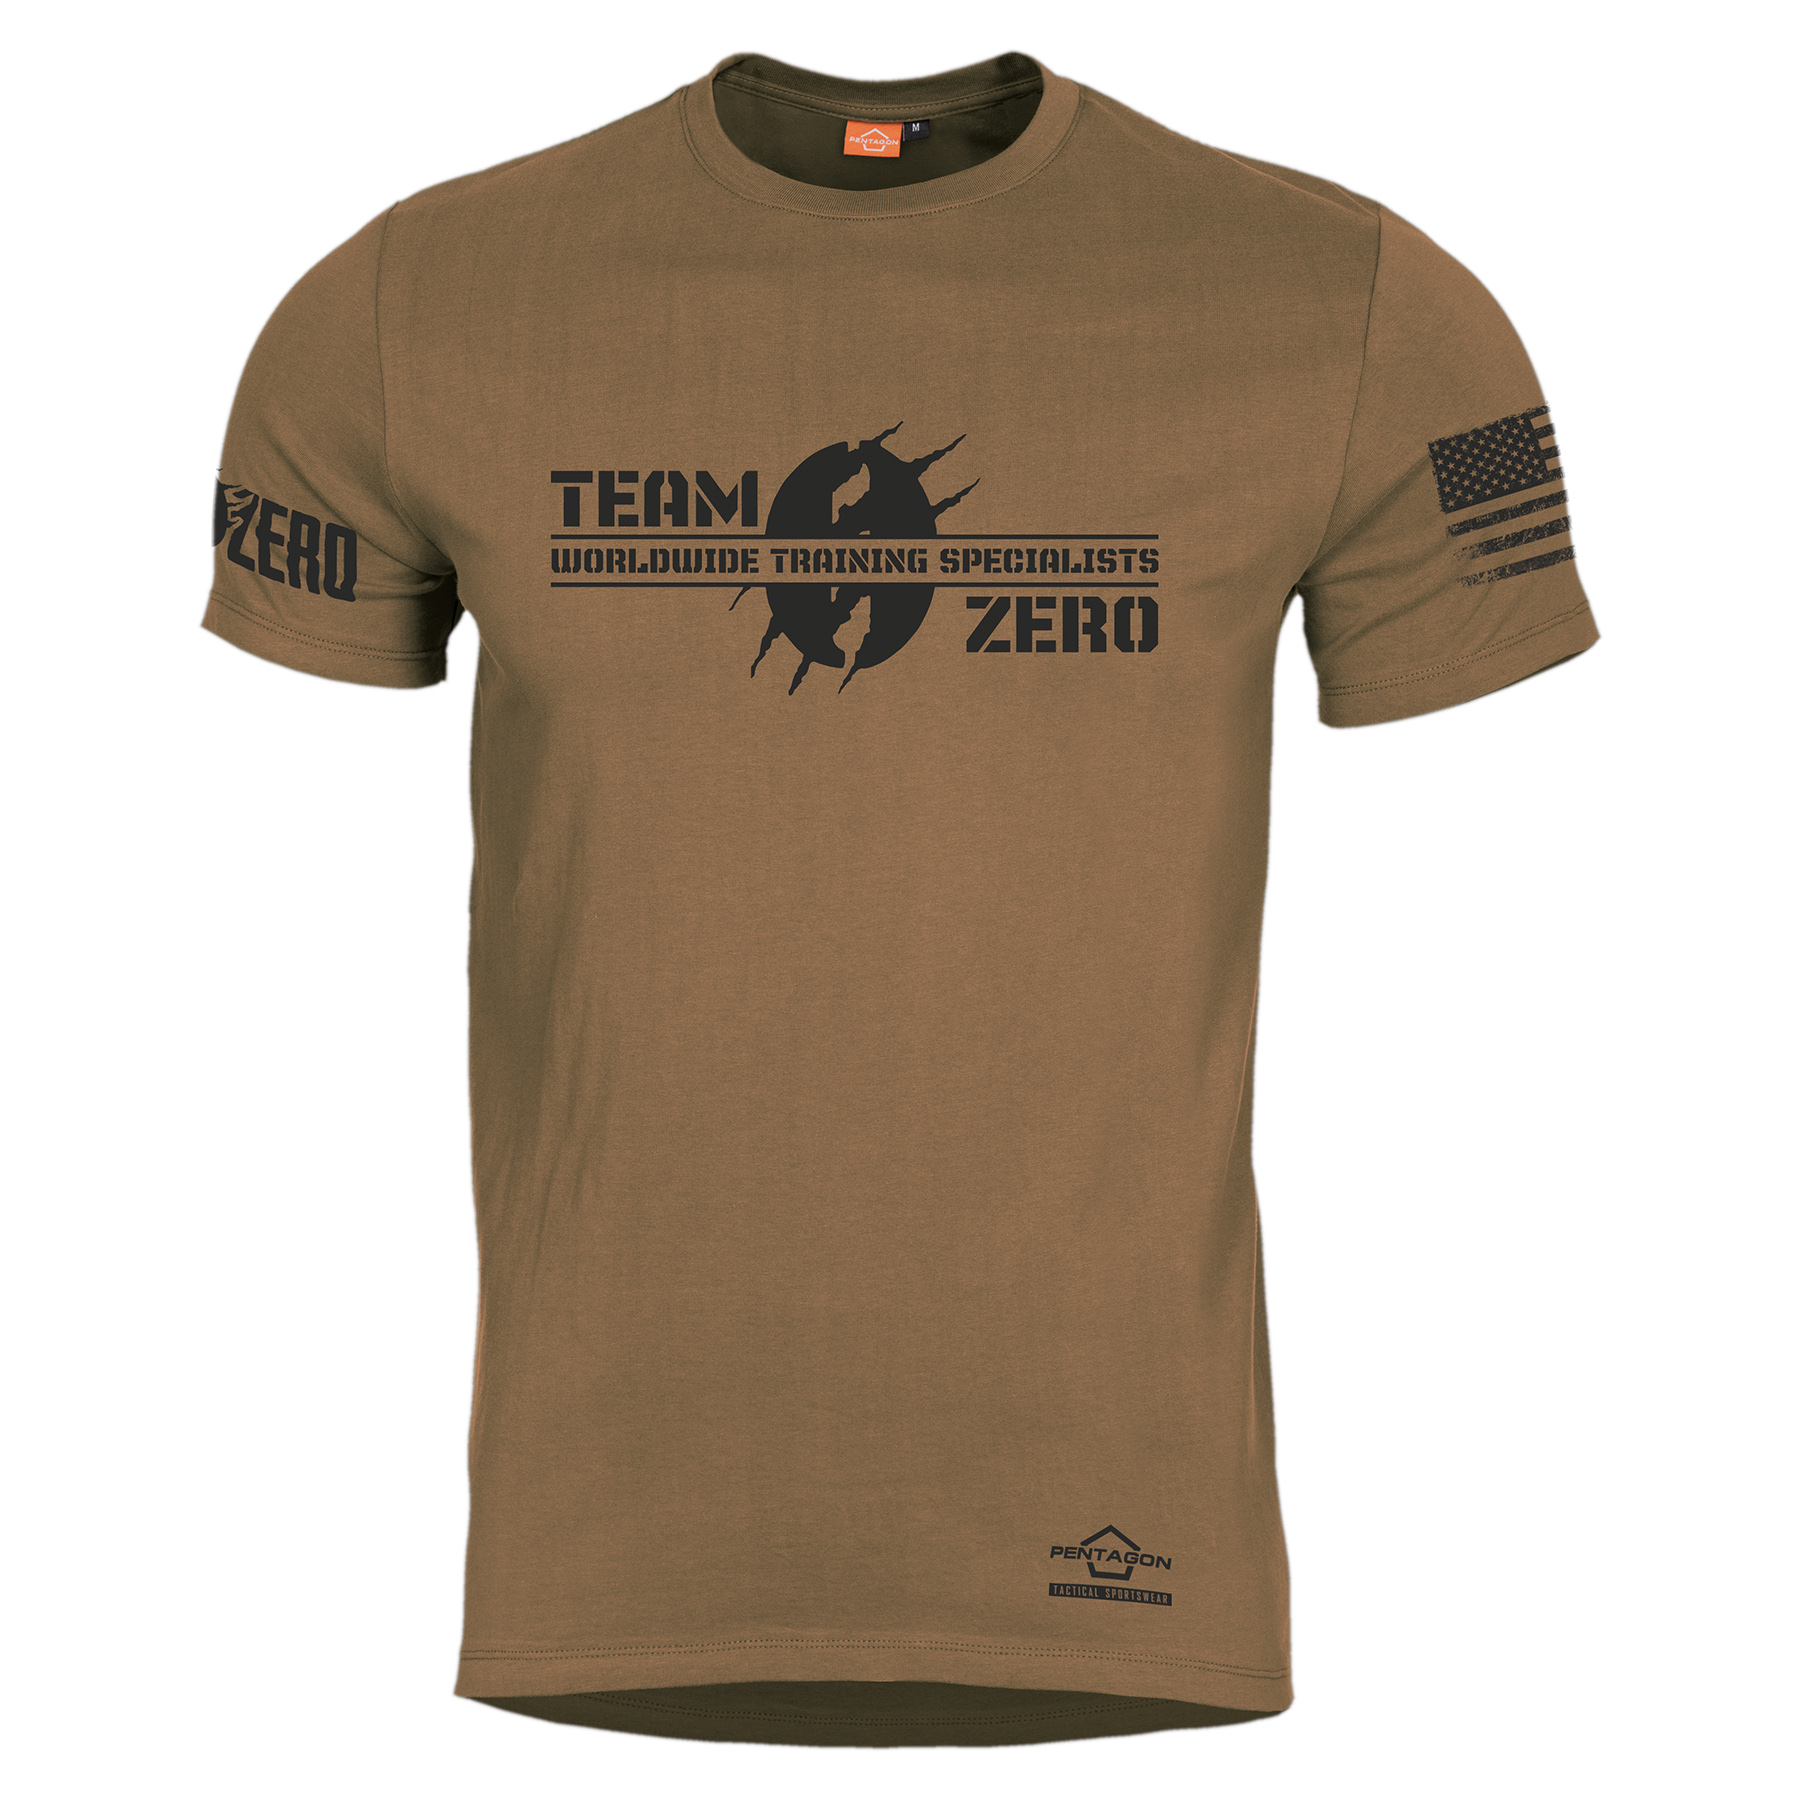 Ageron "Zero Edition" T-Shirt